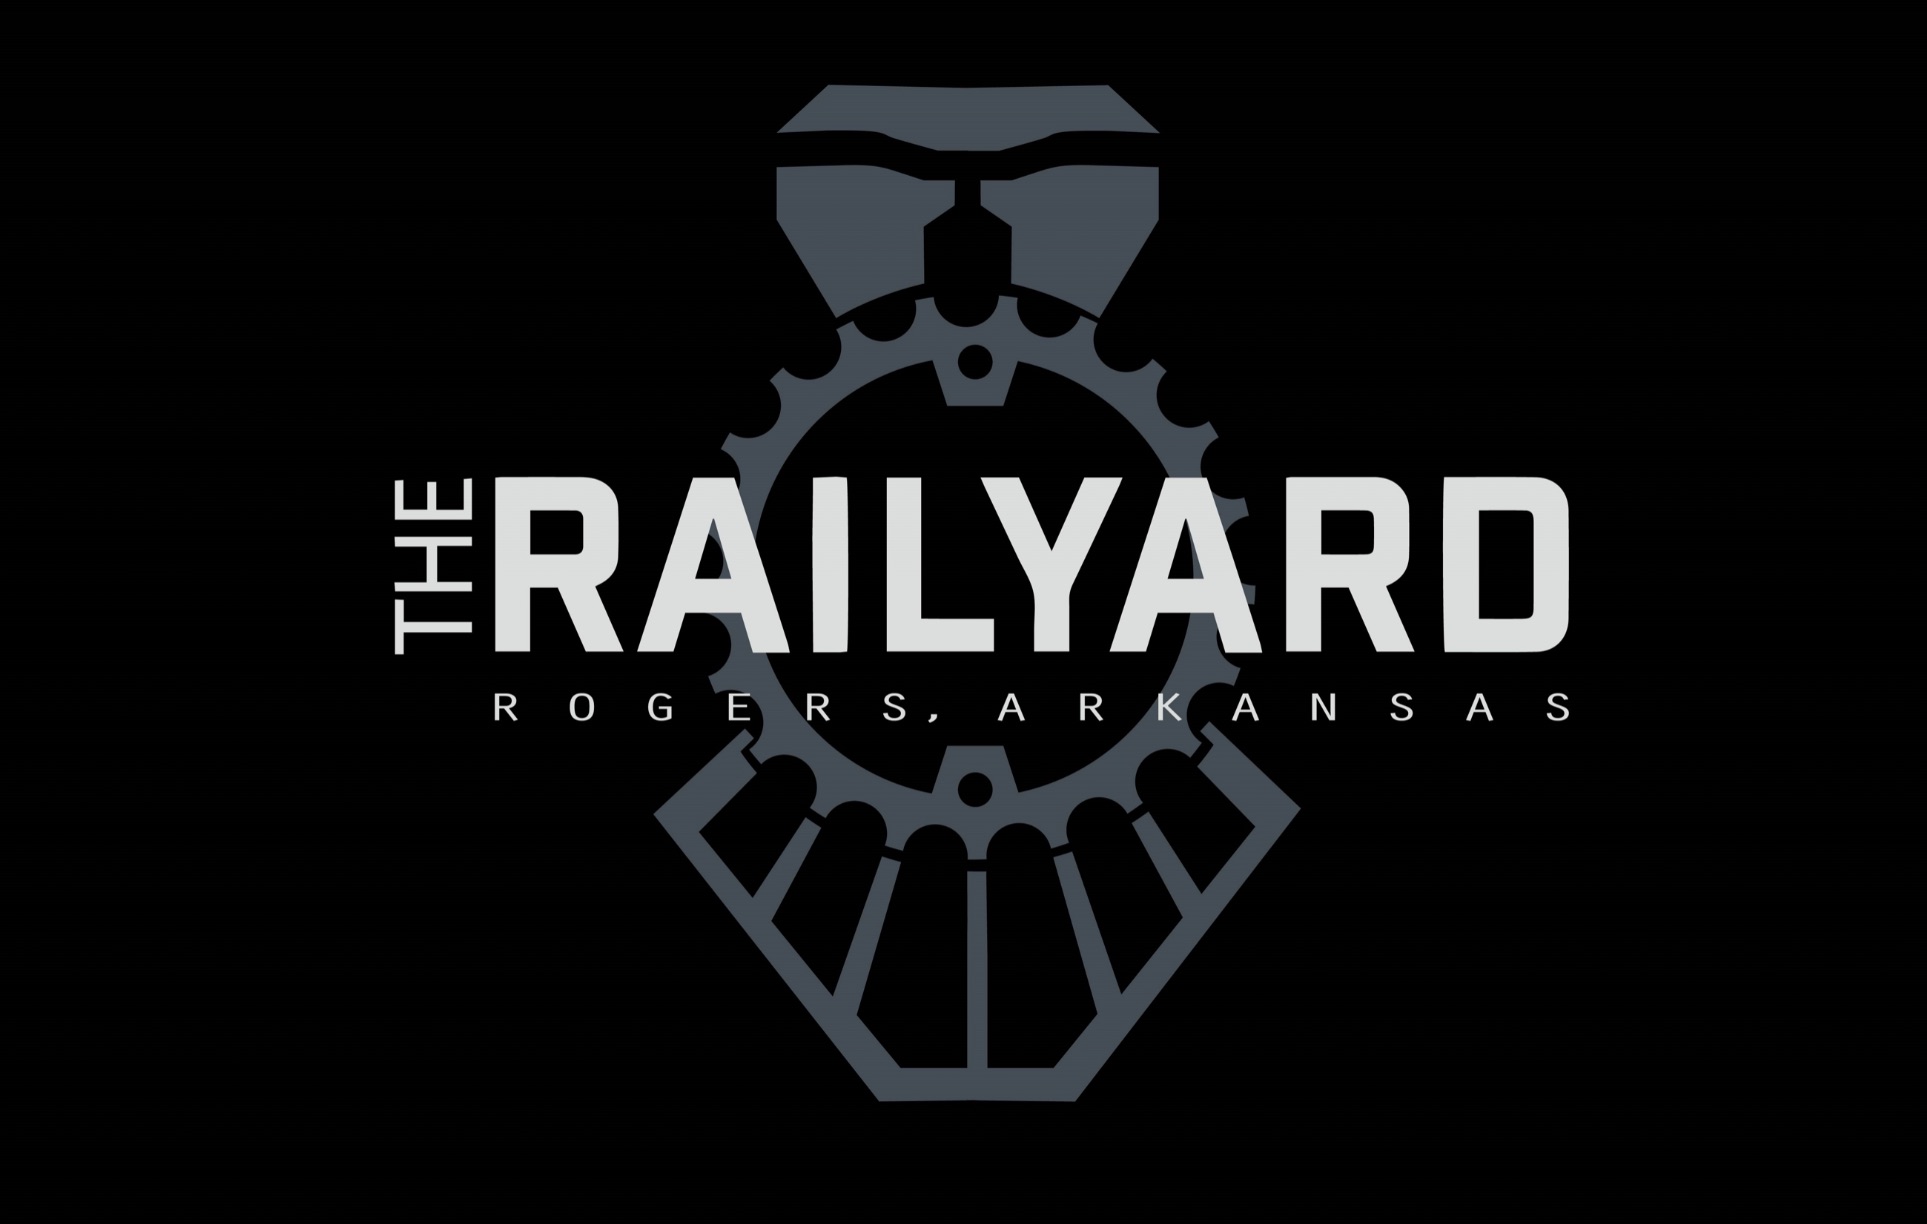 The Railyard Rogers